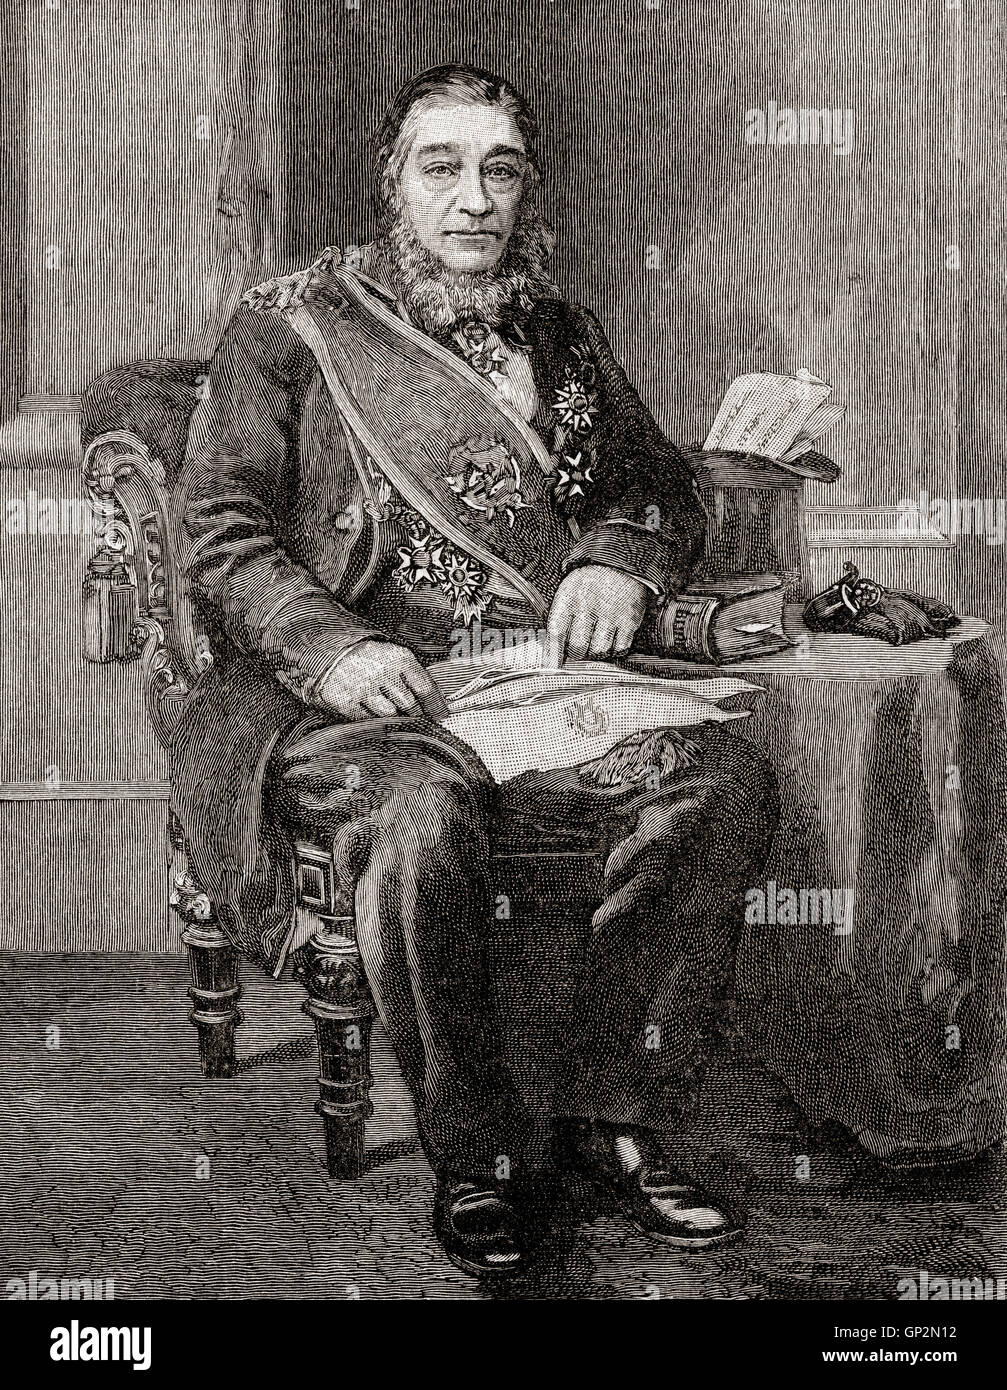 Stephanus Johannes Paulus 'Paul' Krüger, 1825 - 1904. 3 Präsidenten der Südafrikanischen Republik. Stockfoto